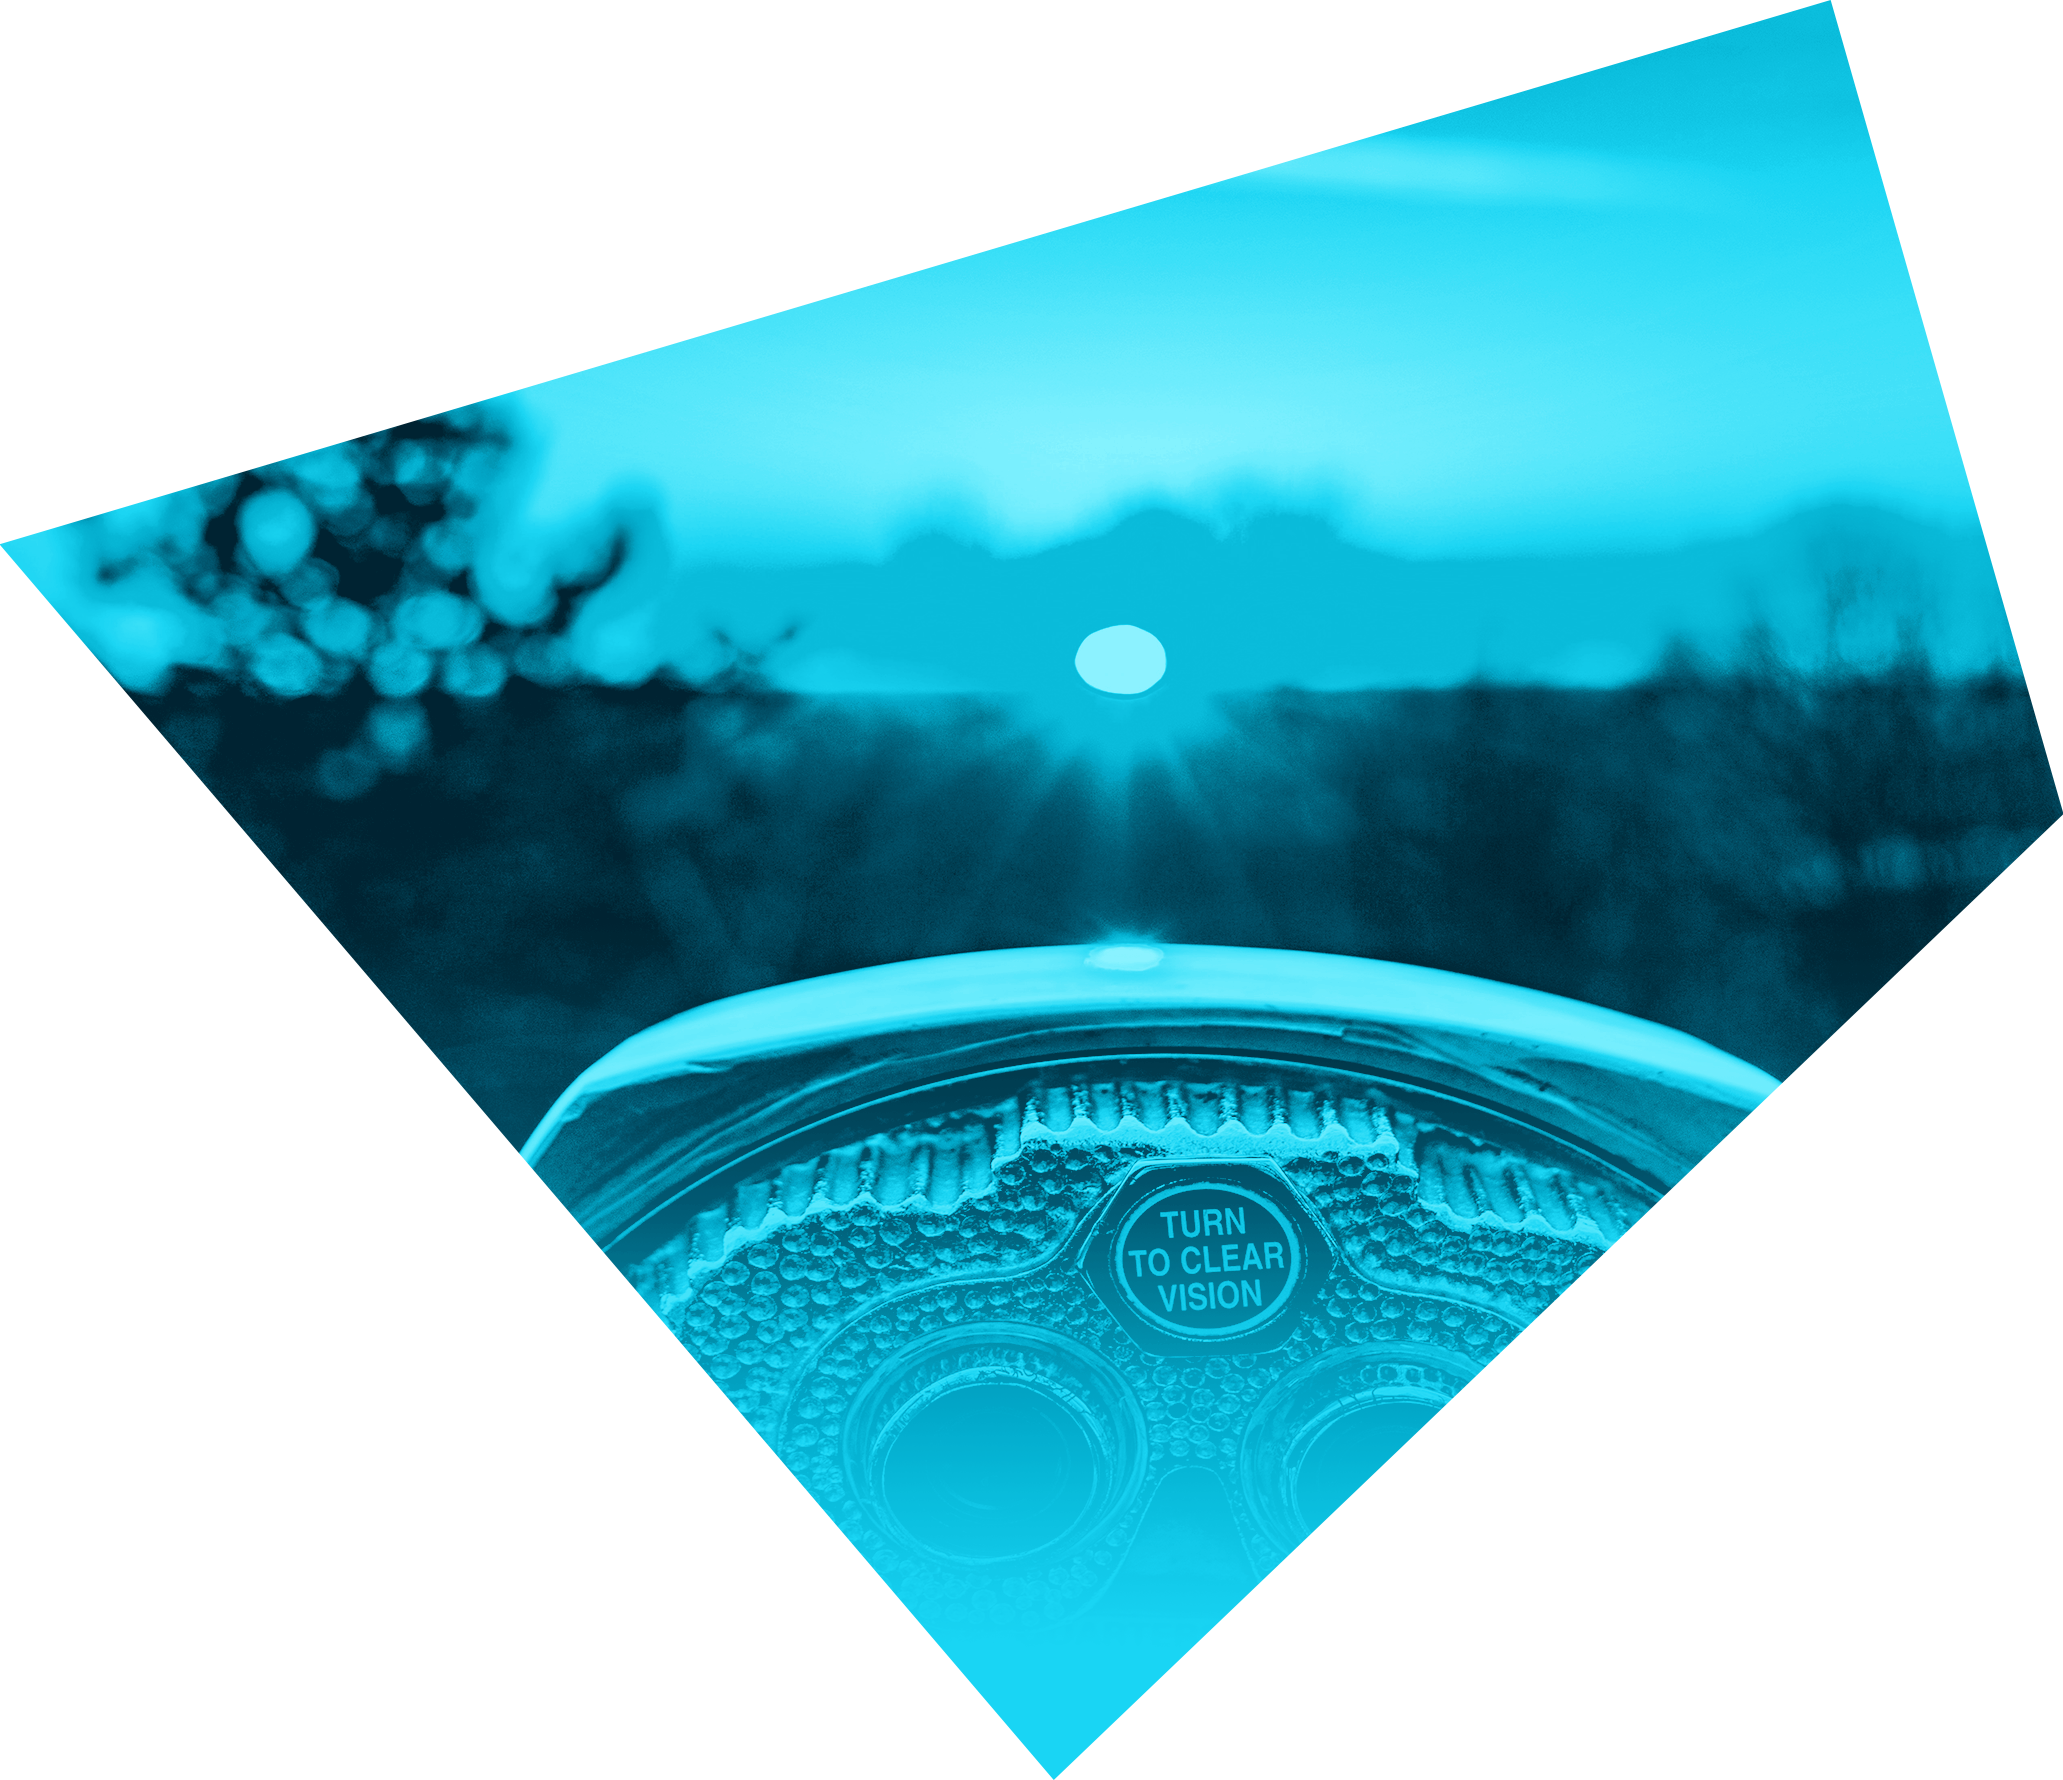 Lookout binoculars facing sun on horizon in blue filter